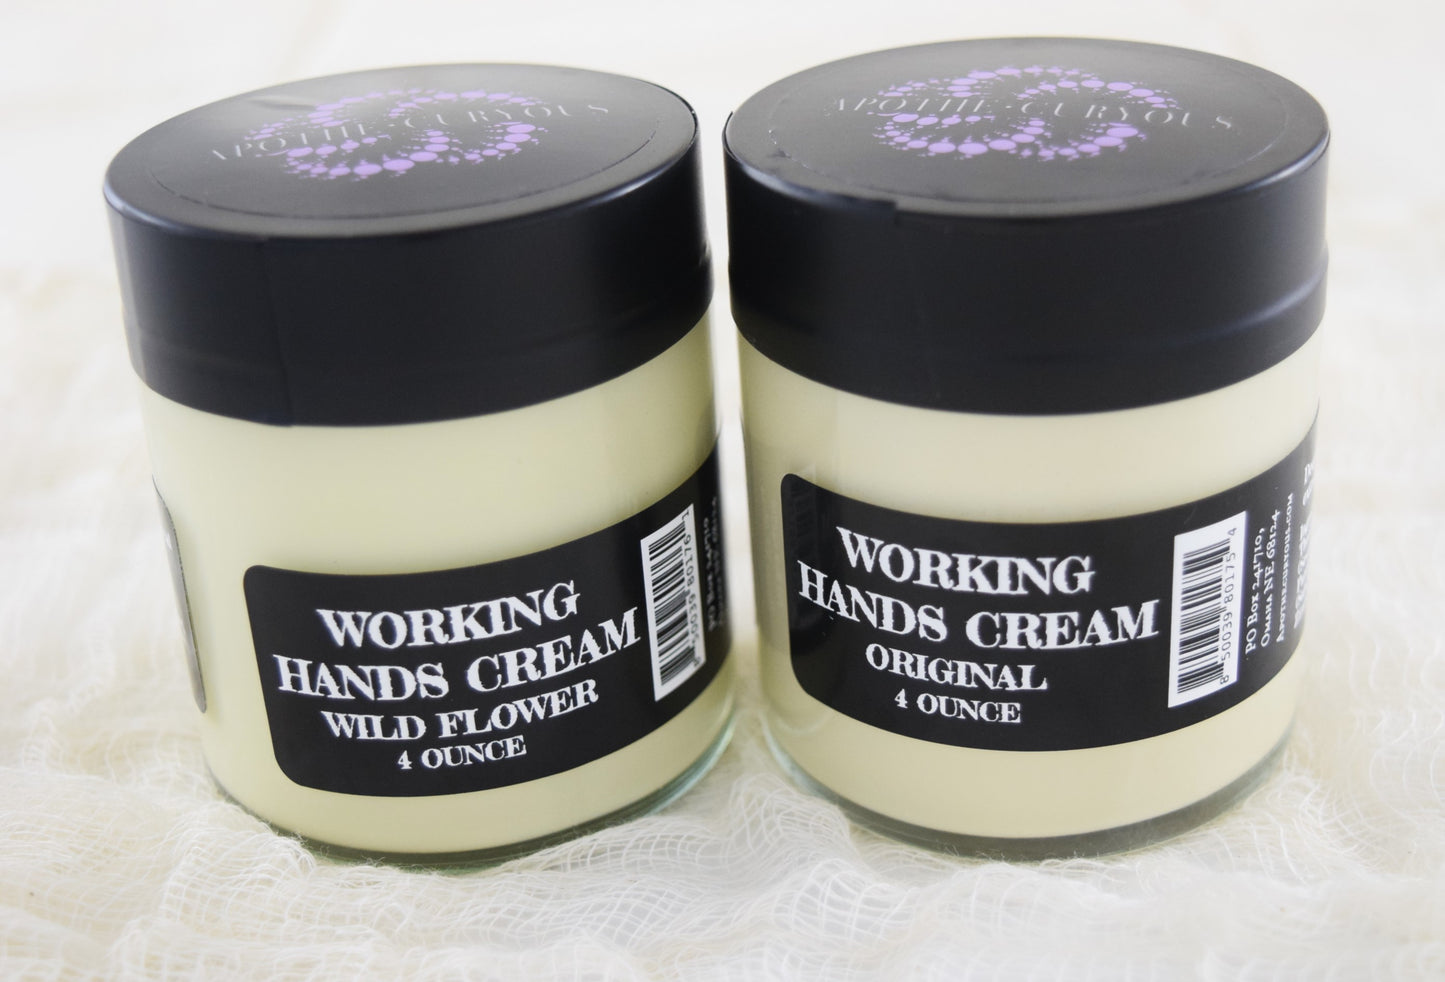 Working Hands Cream 4 ounce